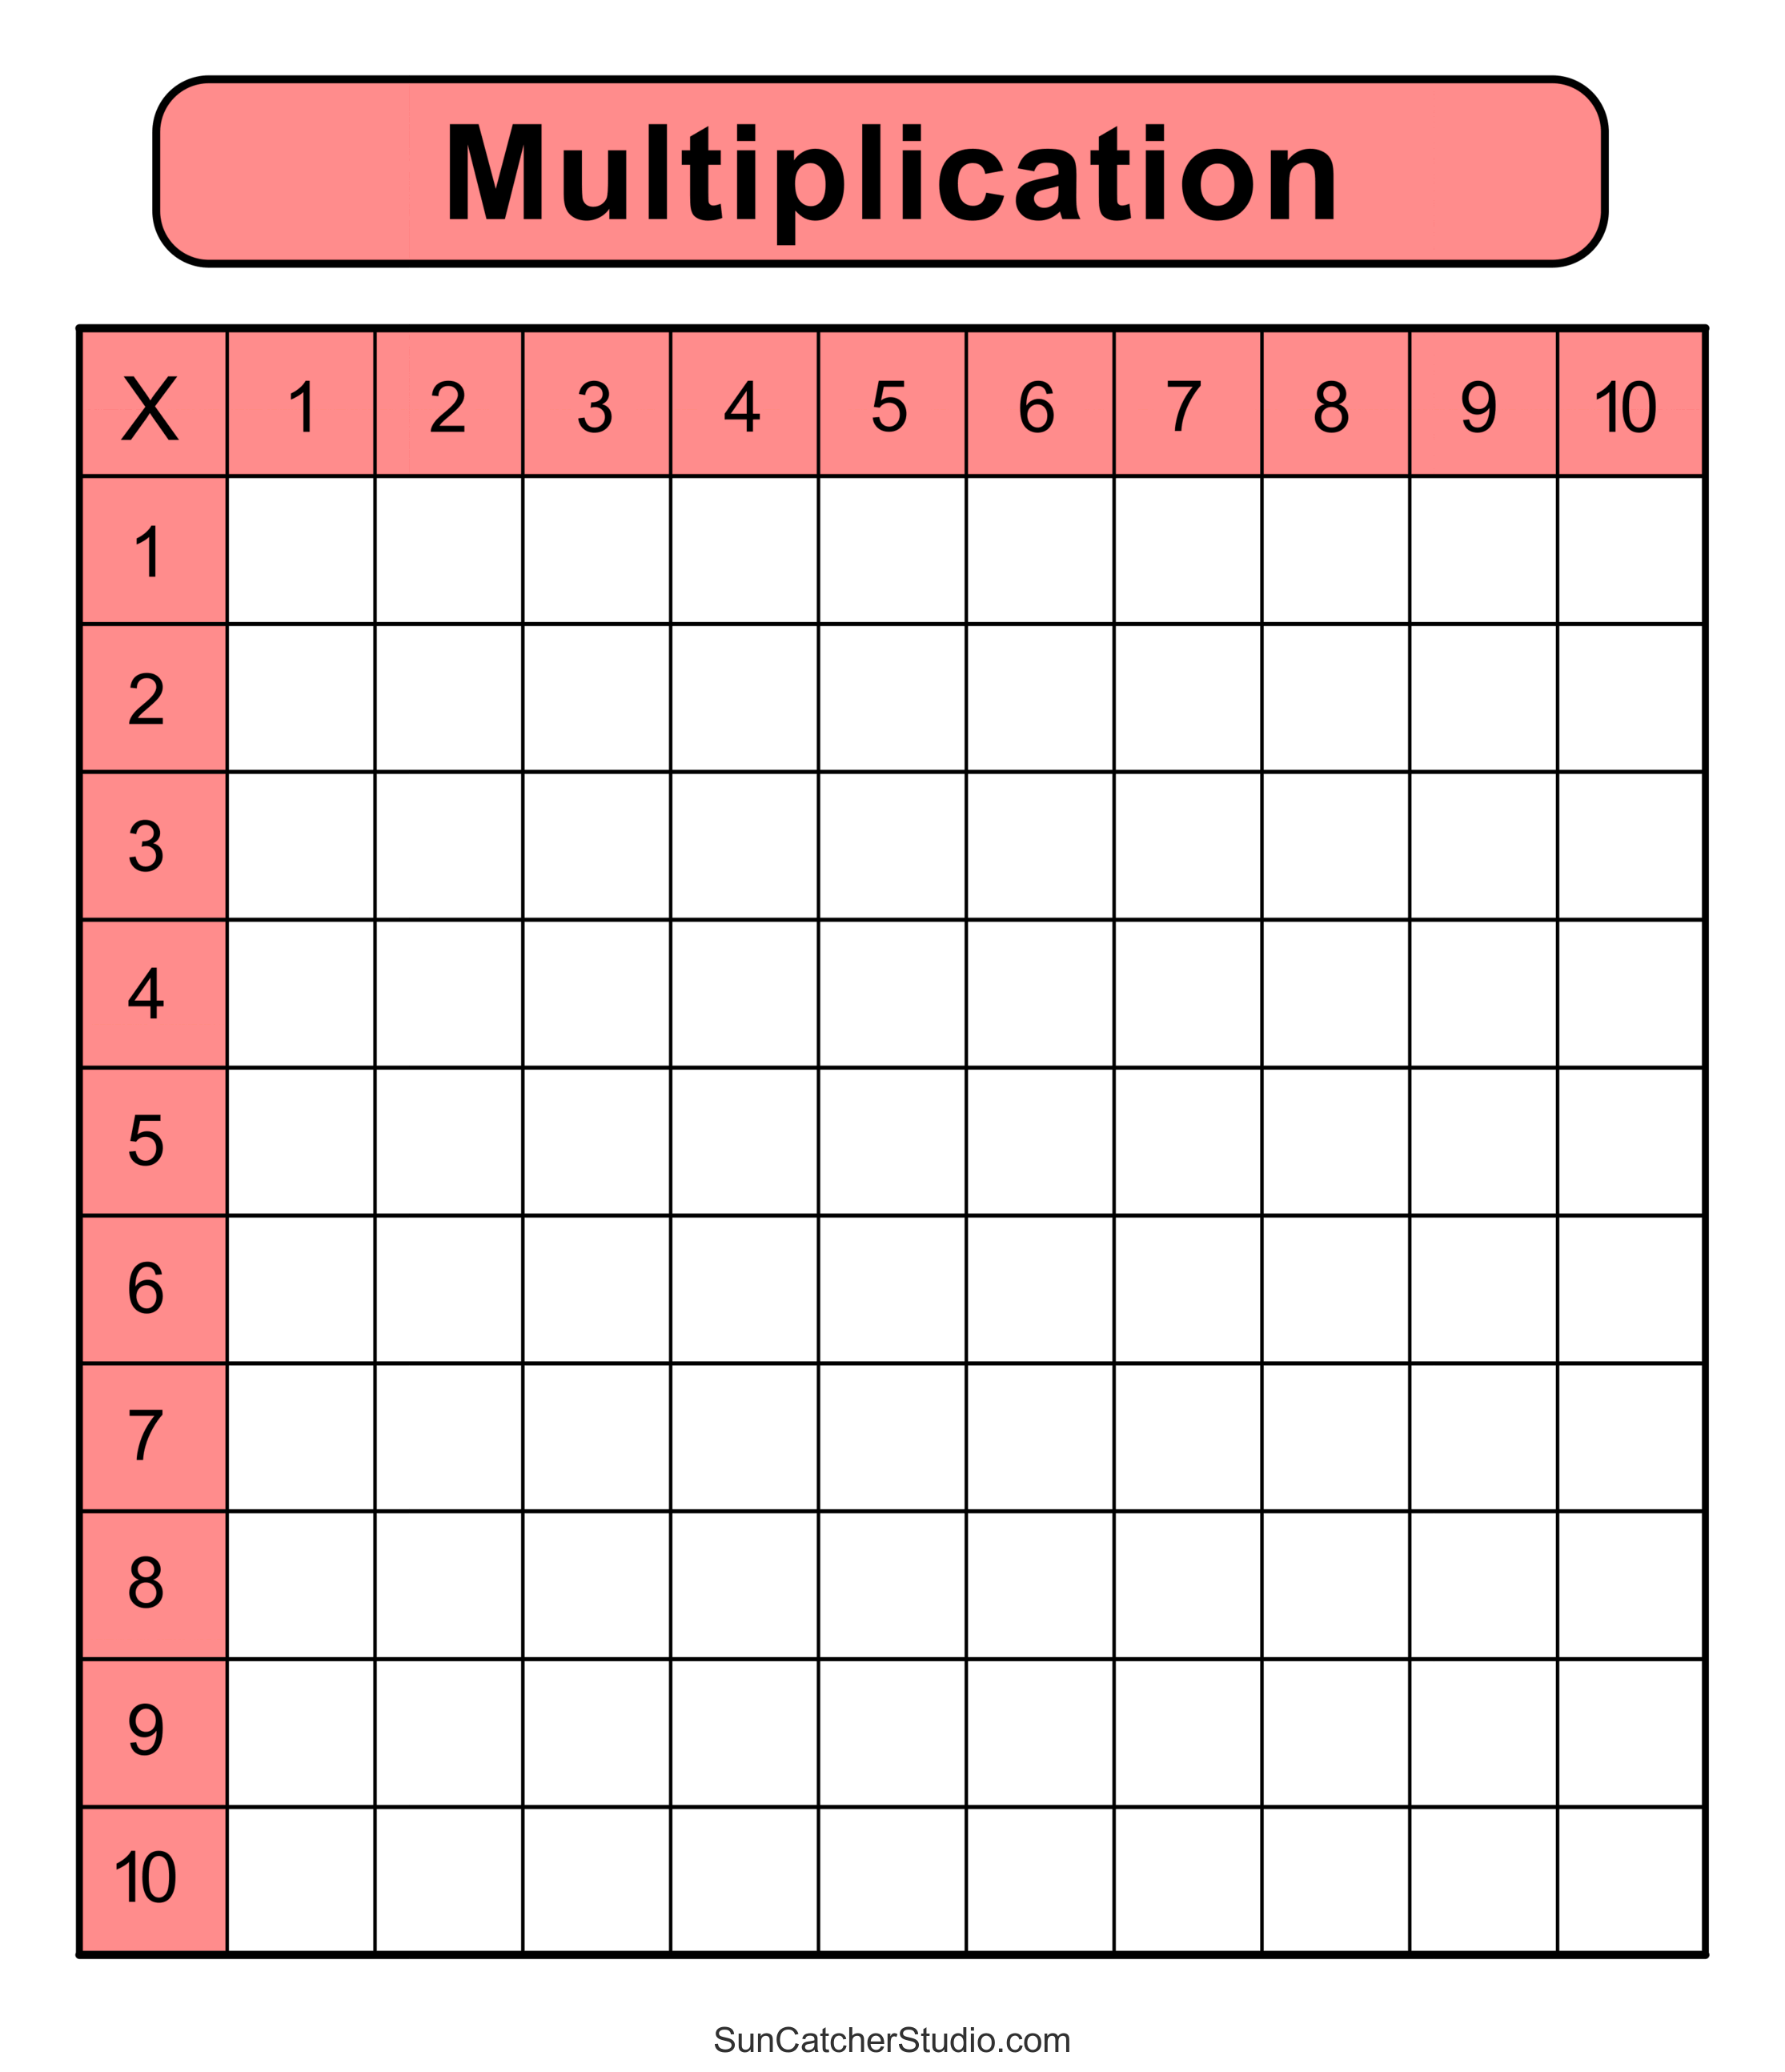 Multiplication Charts Pdf Free